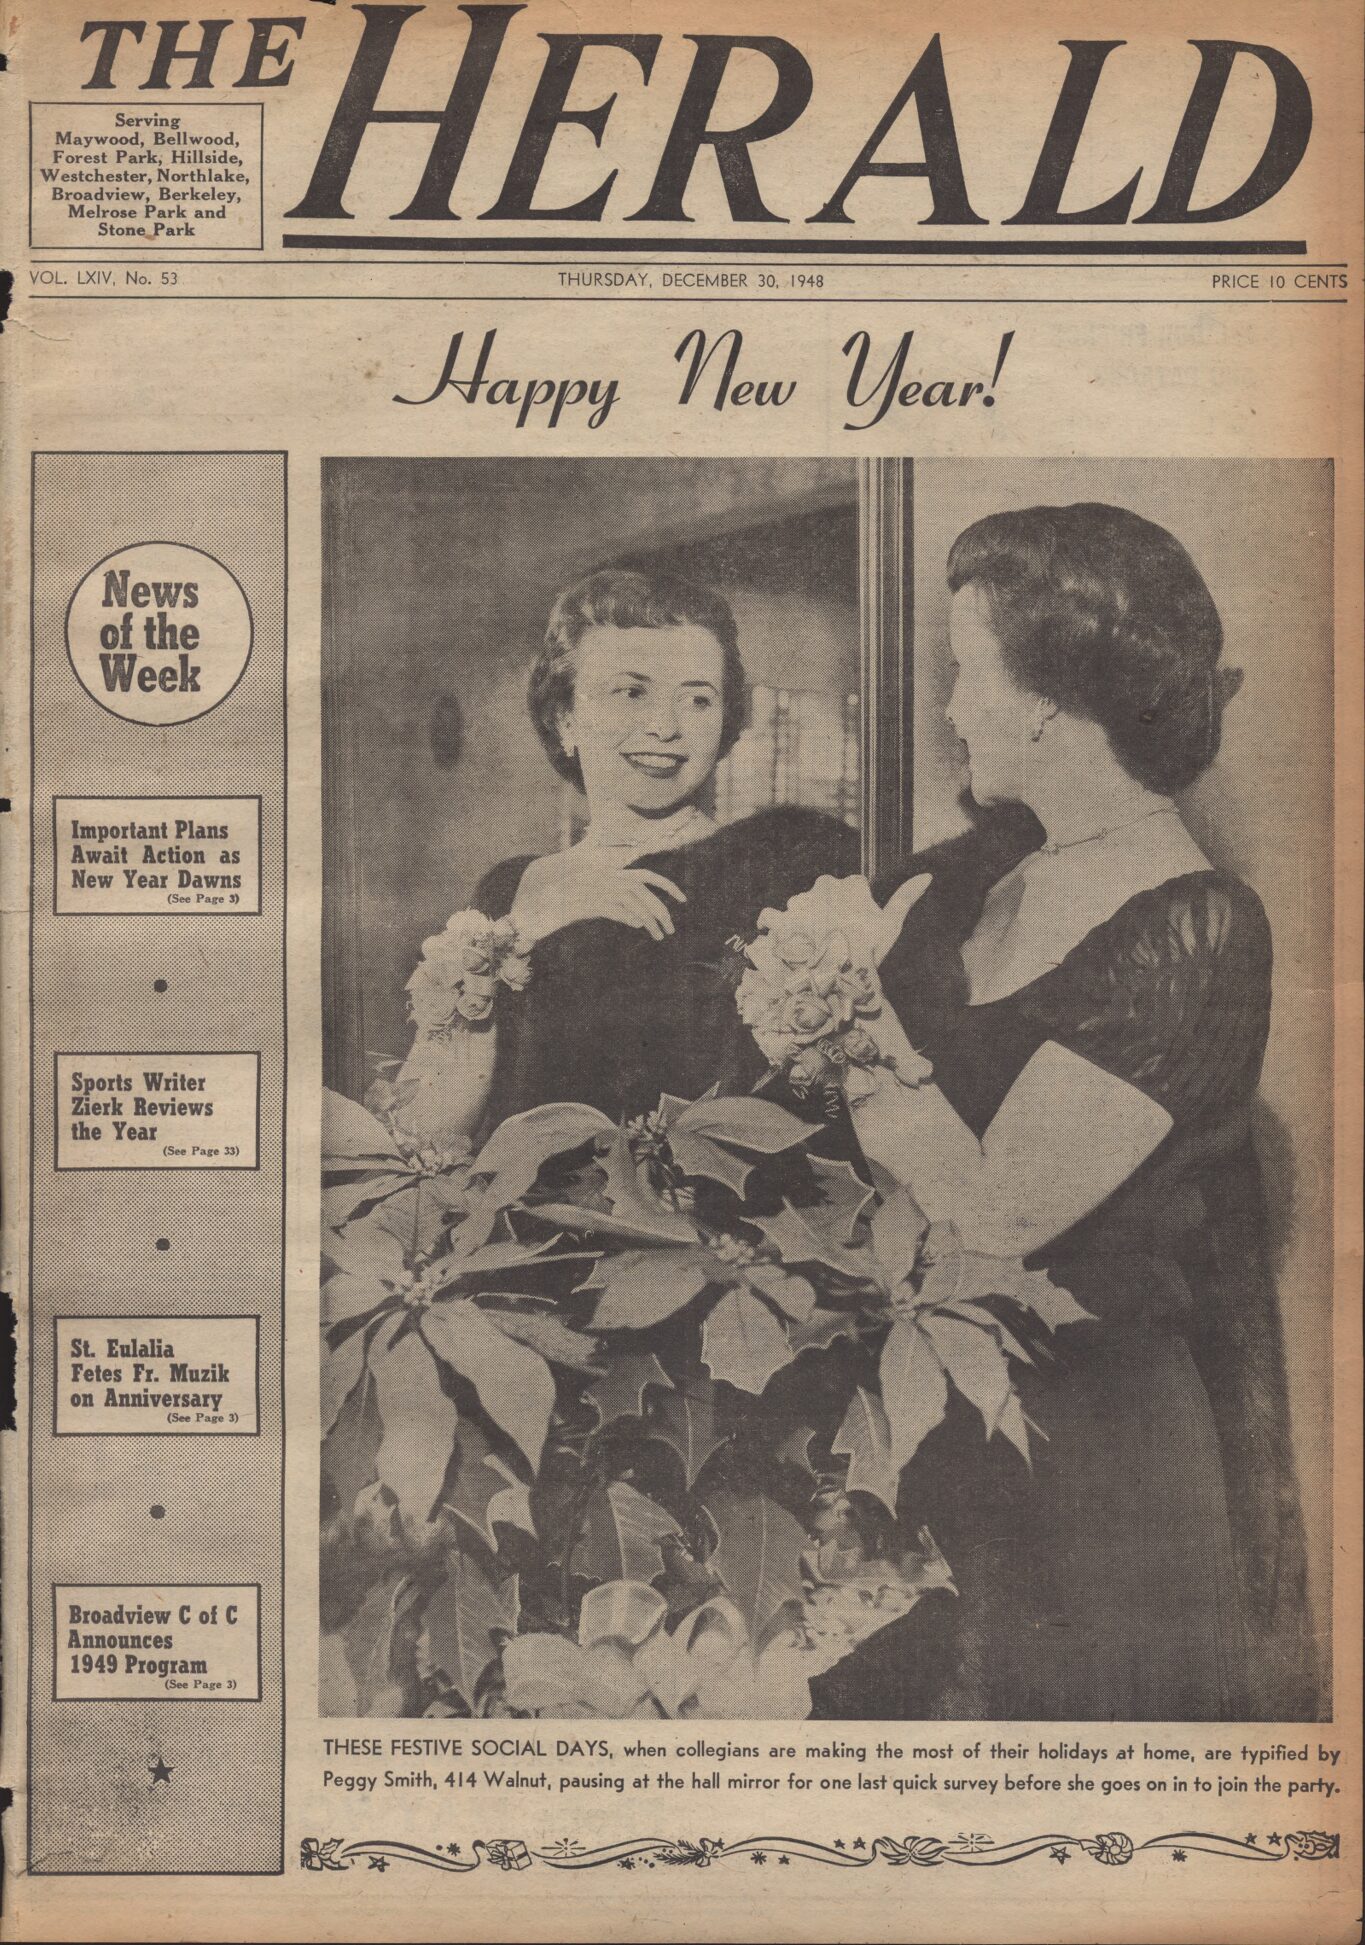 The Herald – 19481230